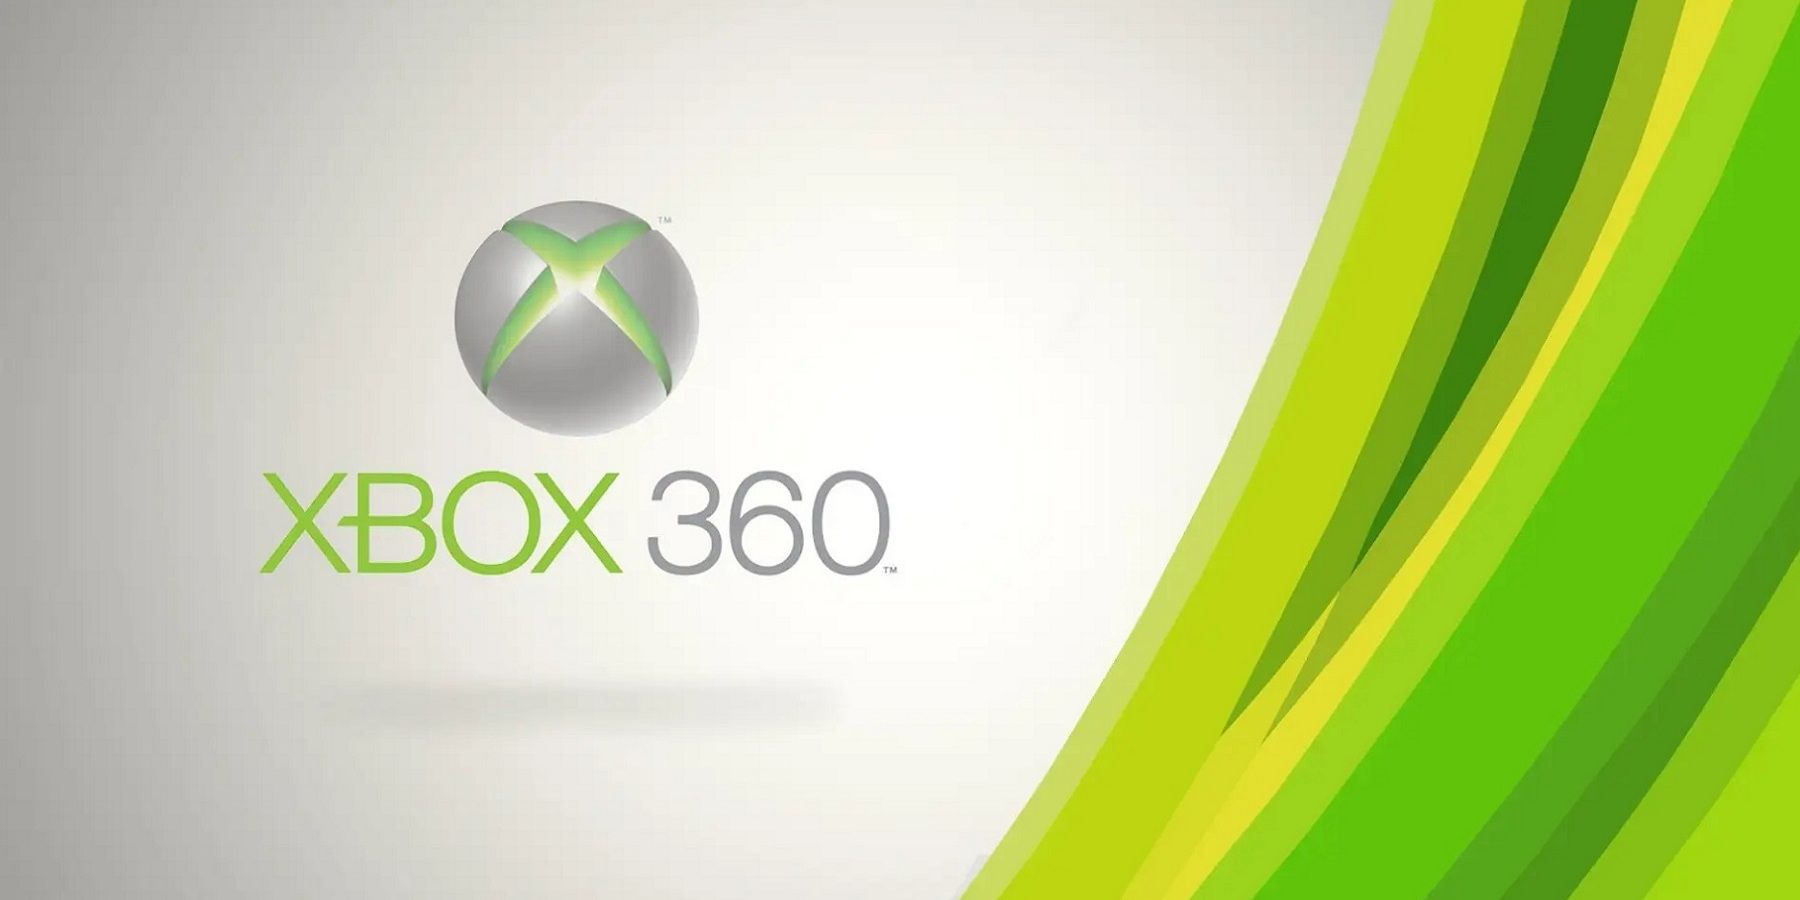 xbox-360-logo